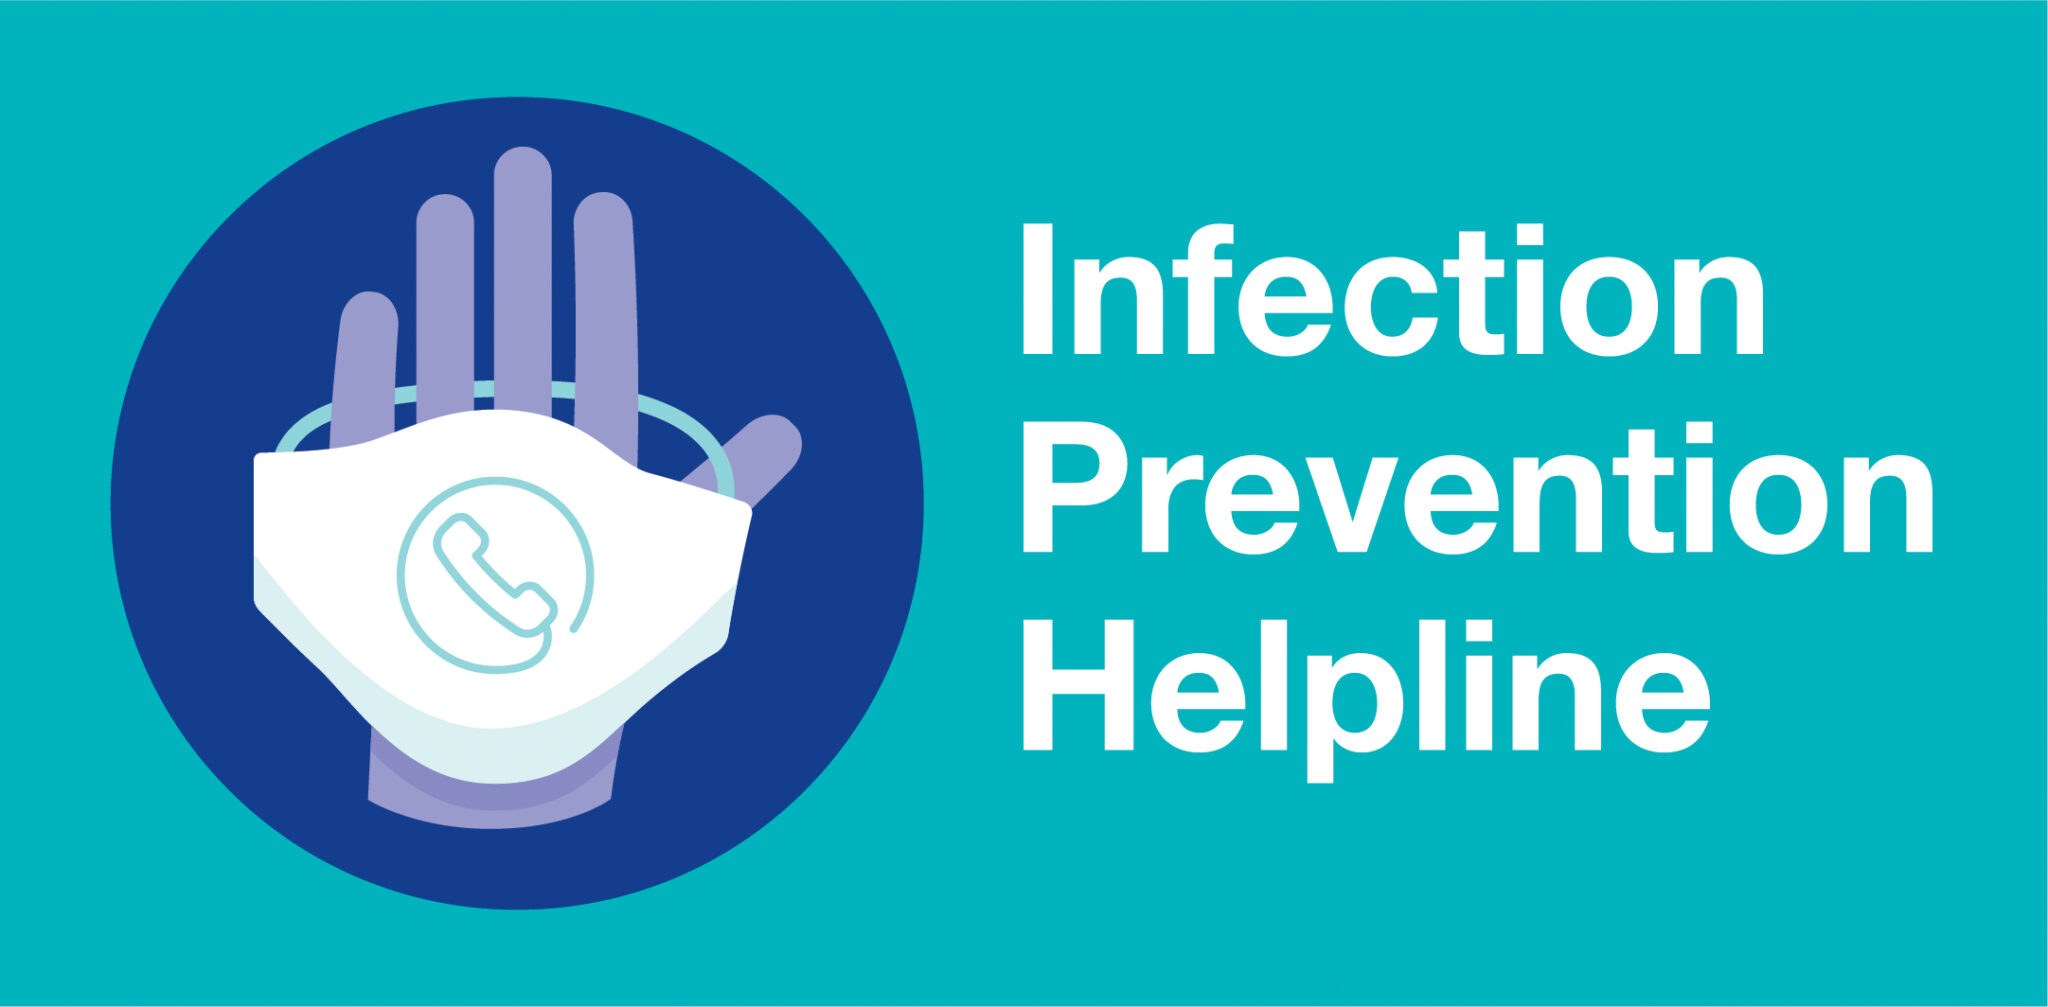 New infection prevention helpline